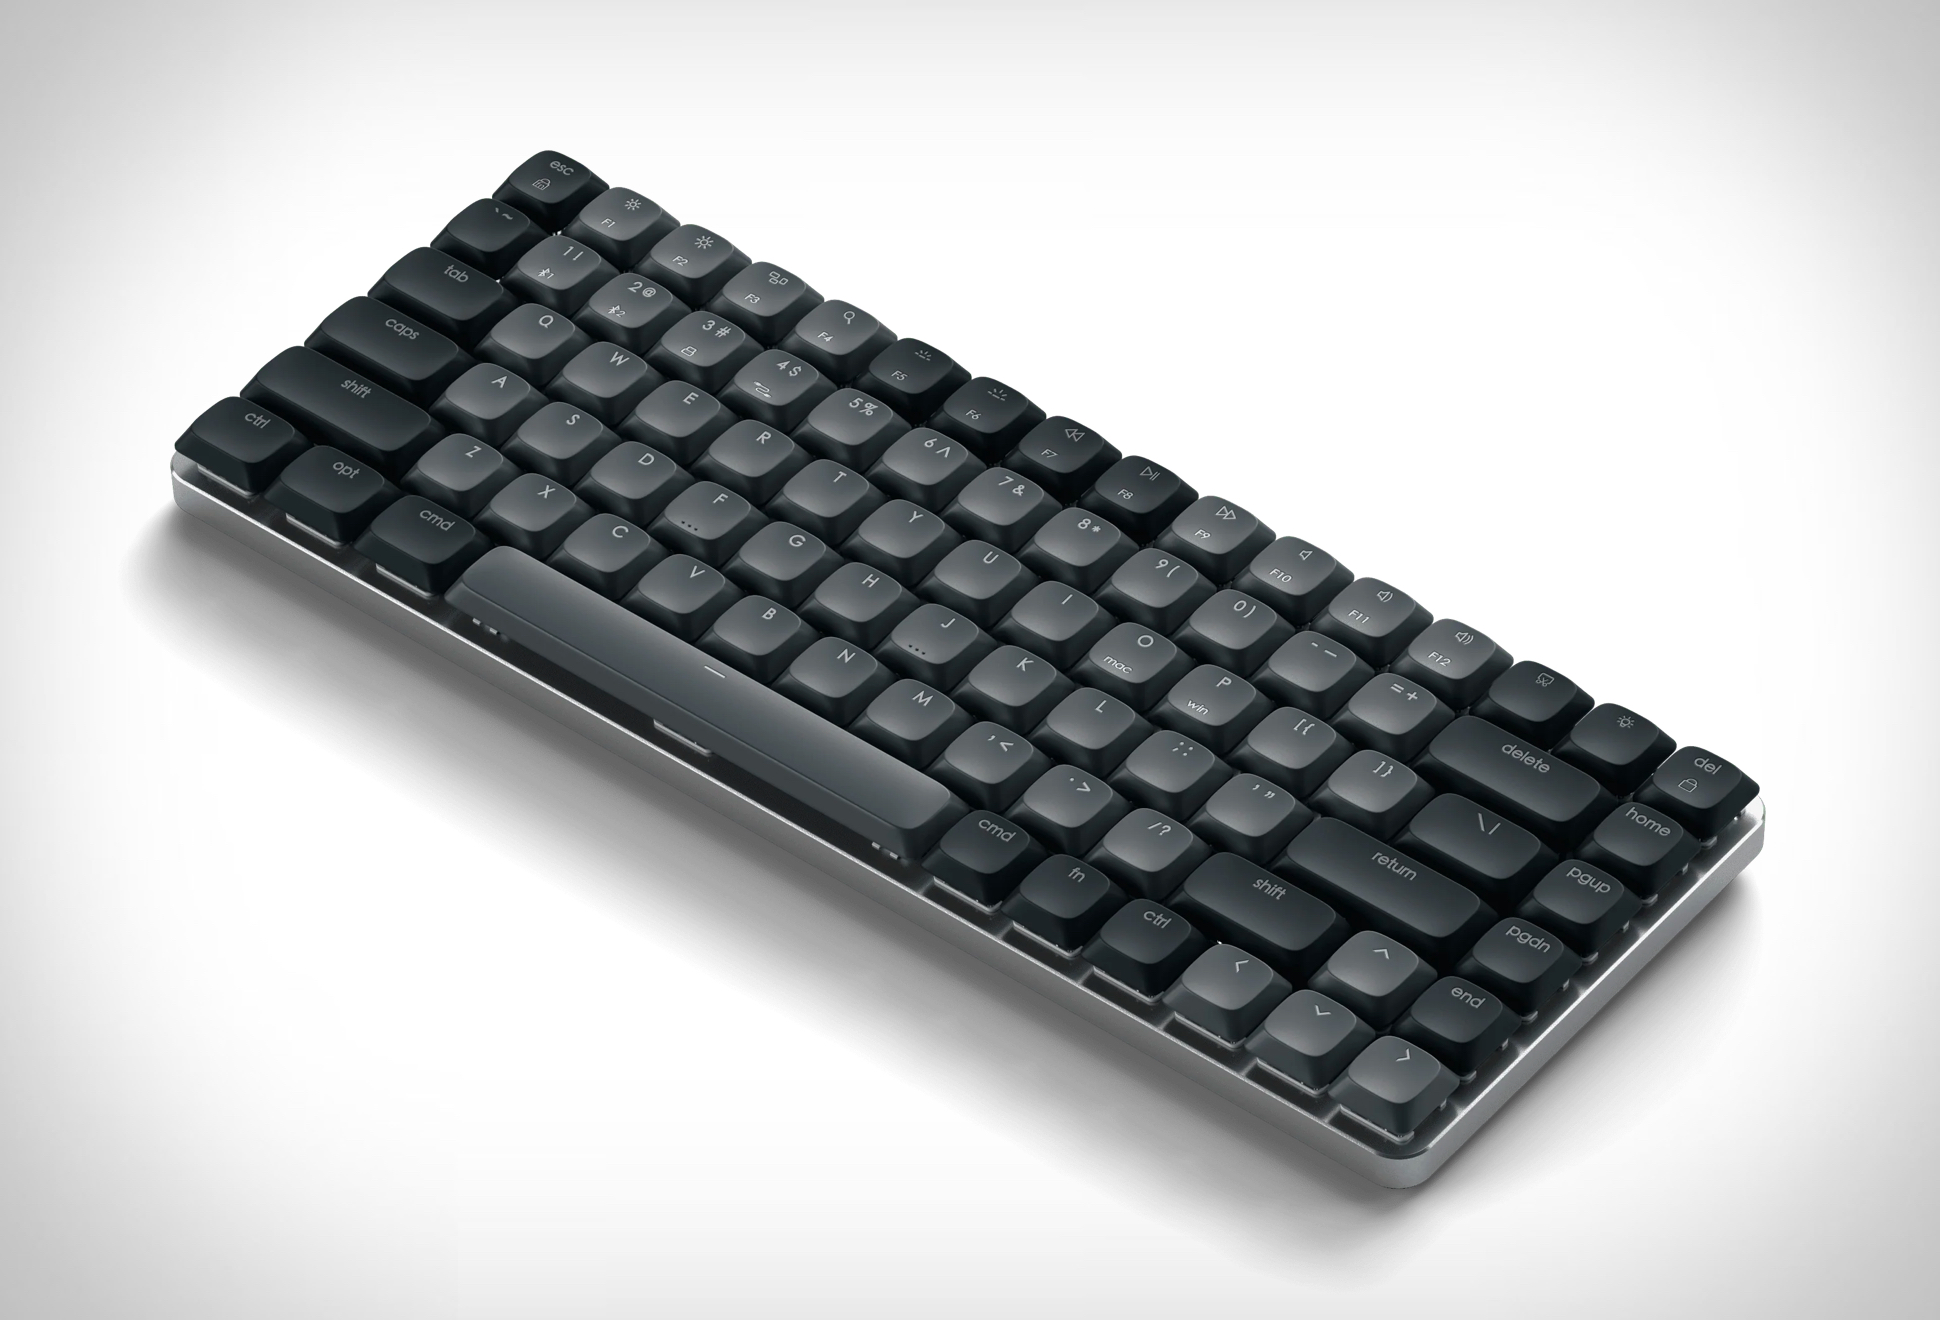 Satechi SM1 Slim Mechanical Keyboard | Image